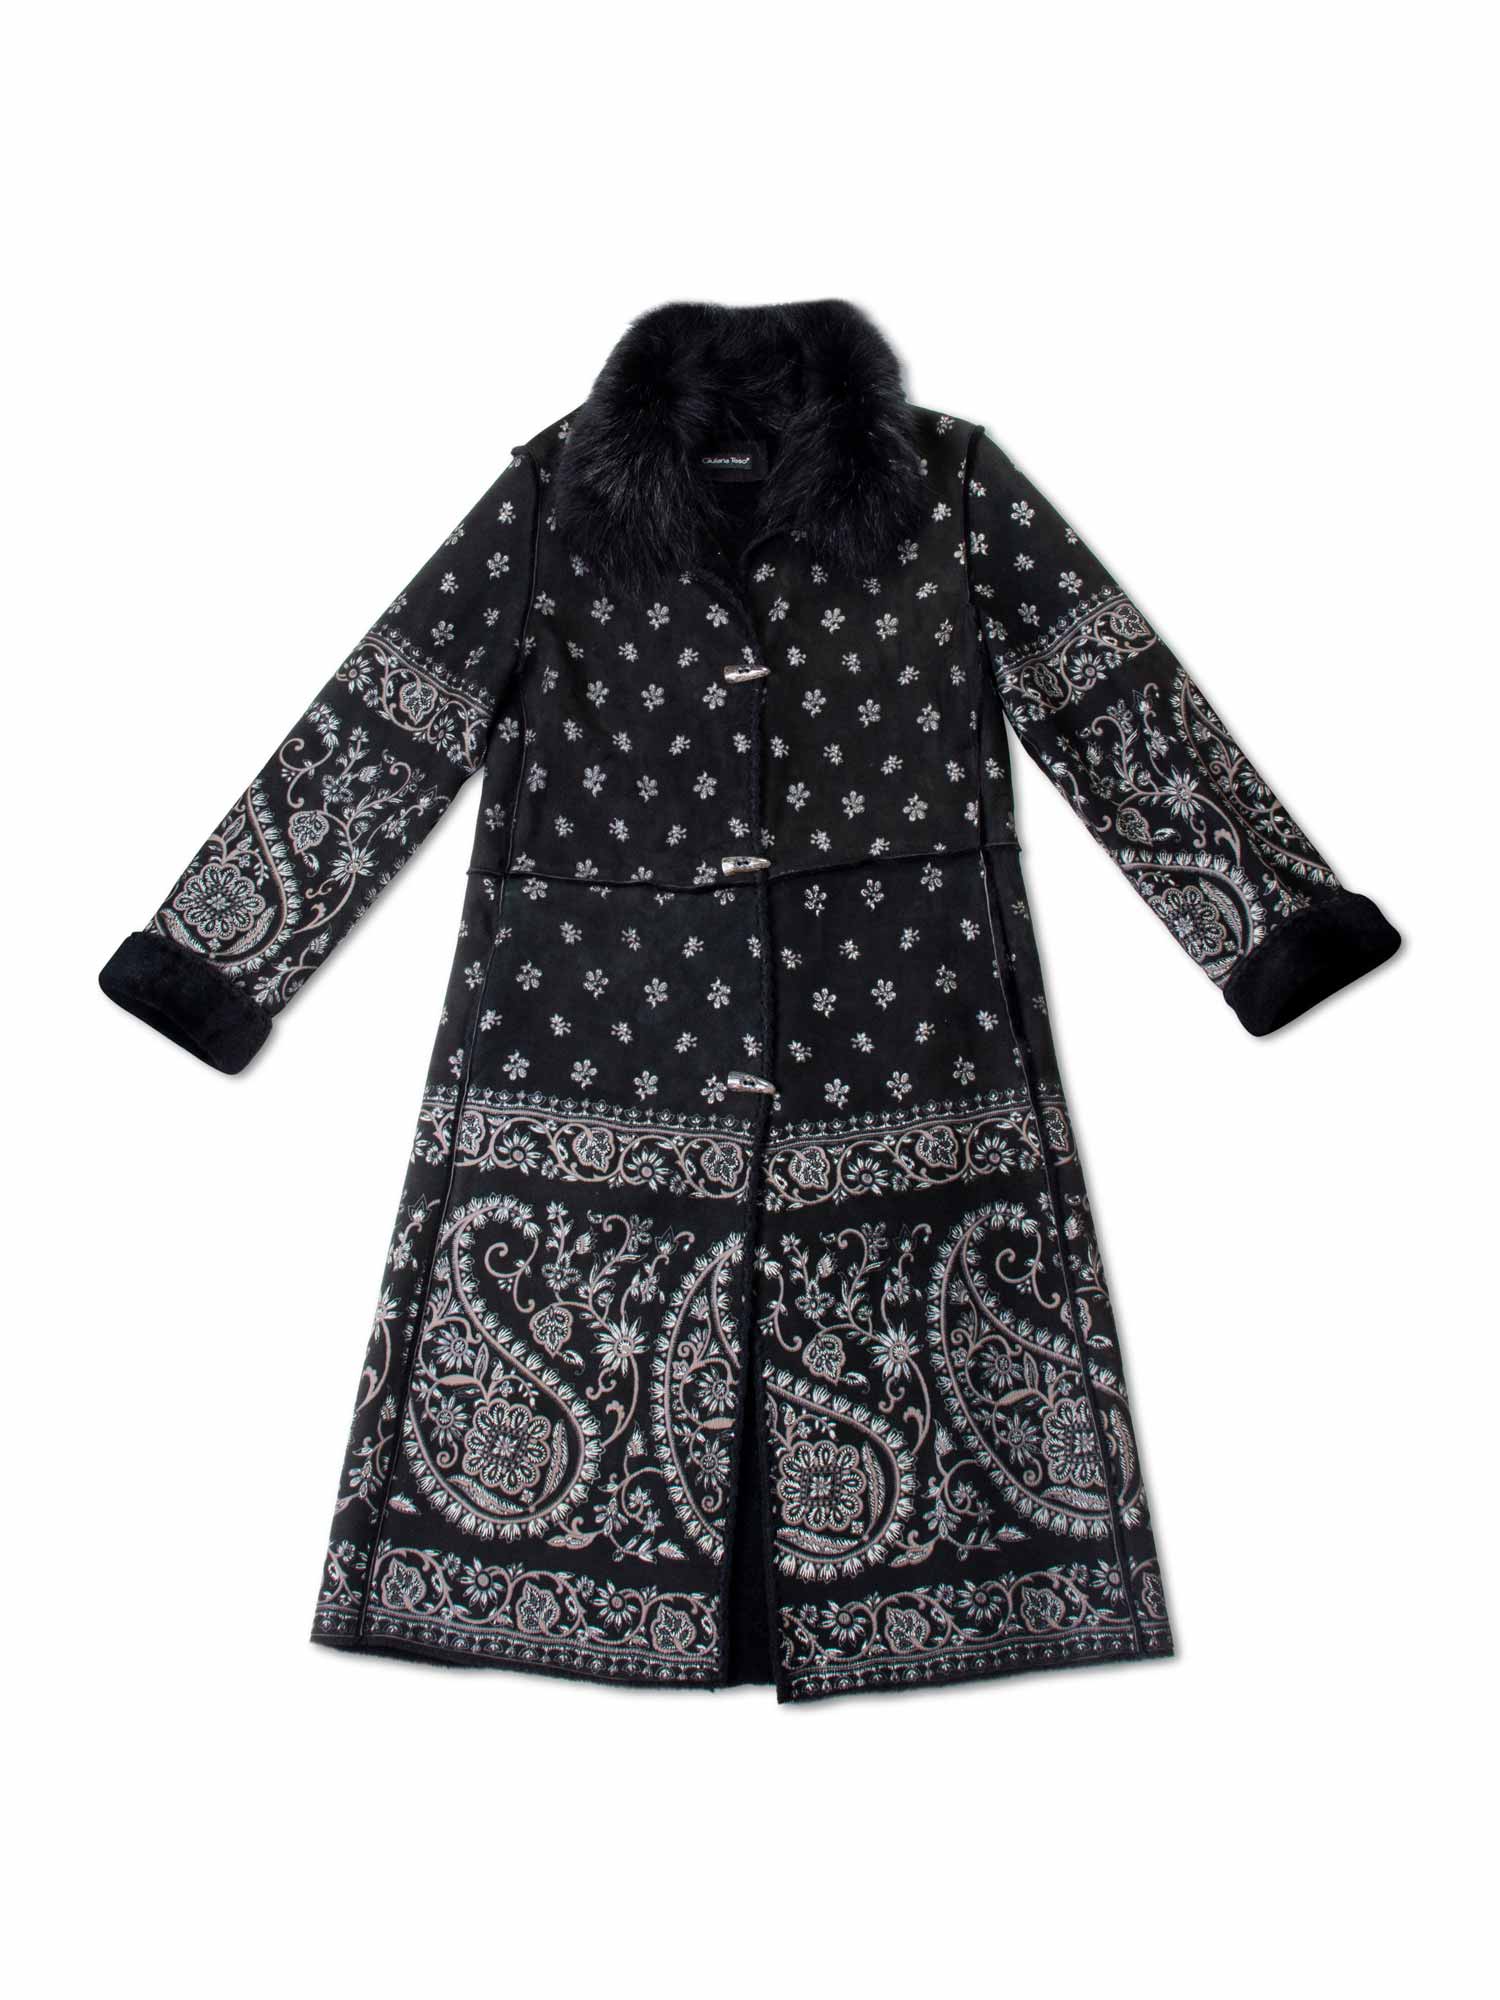 Giuliana Teso Shearling Fox Embroidered Long Coat Black-designer resale